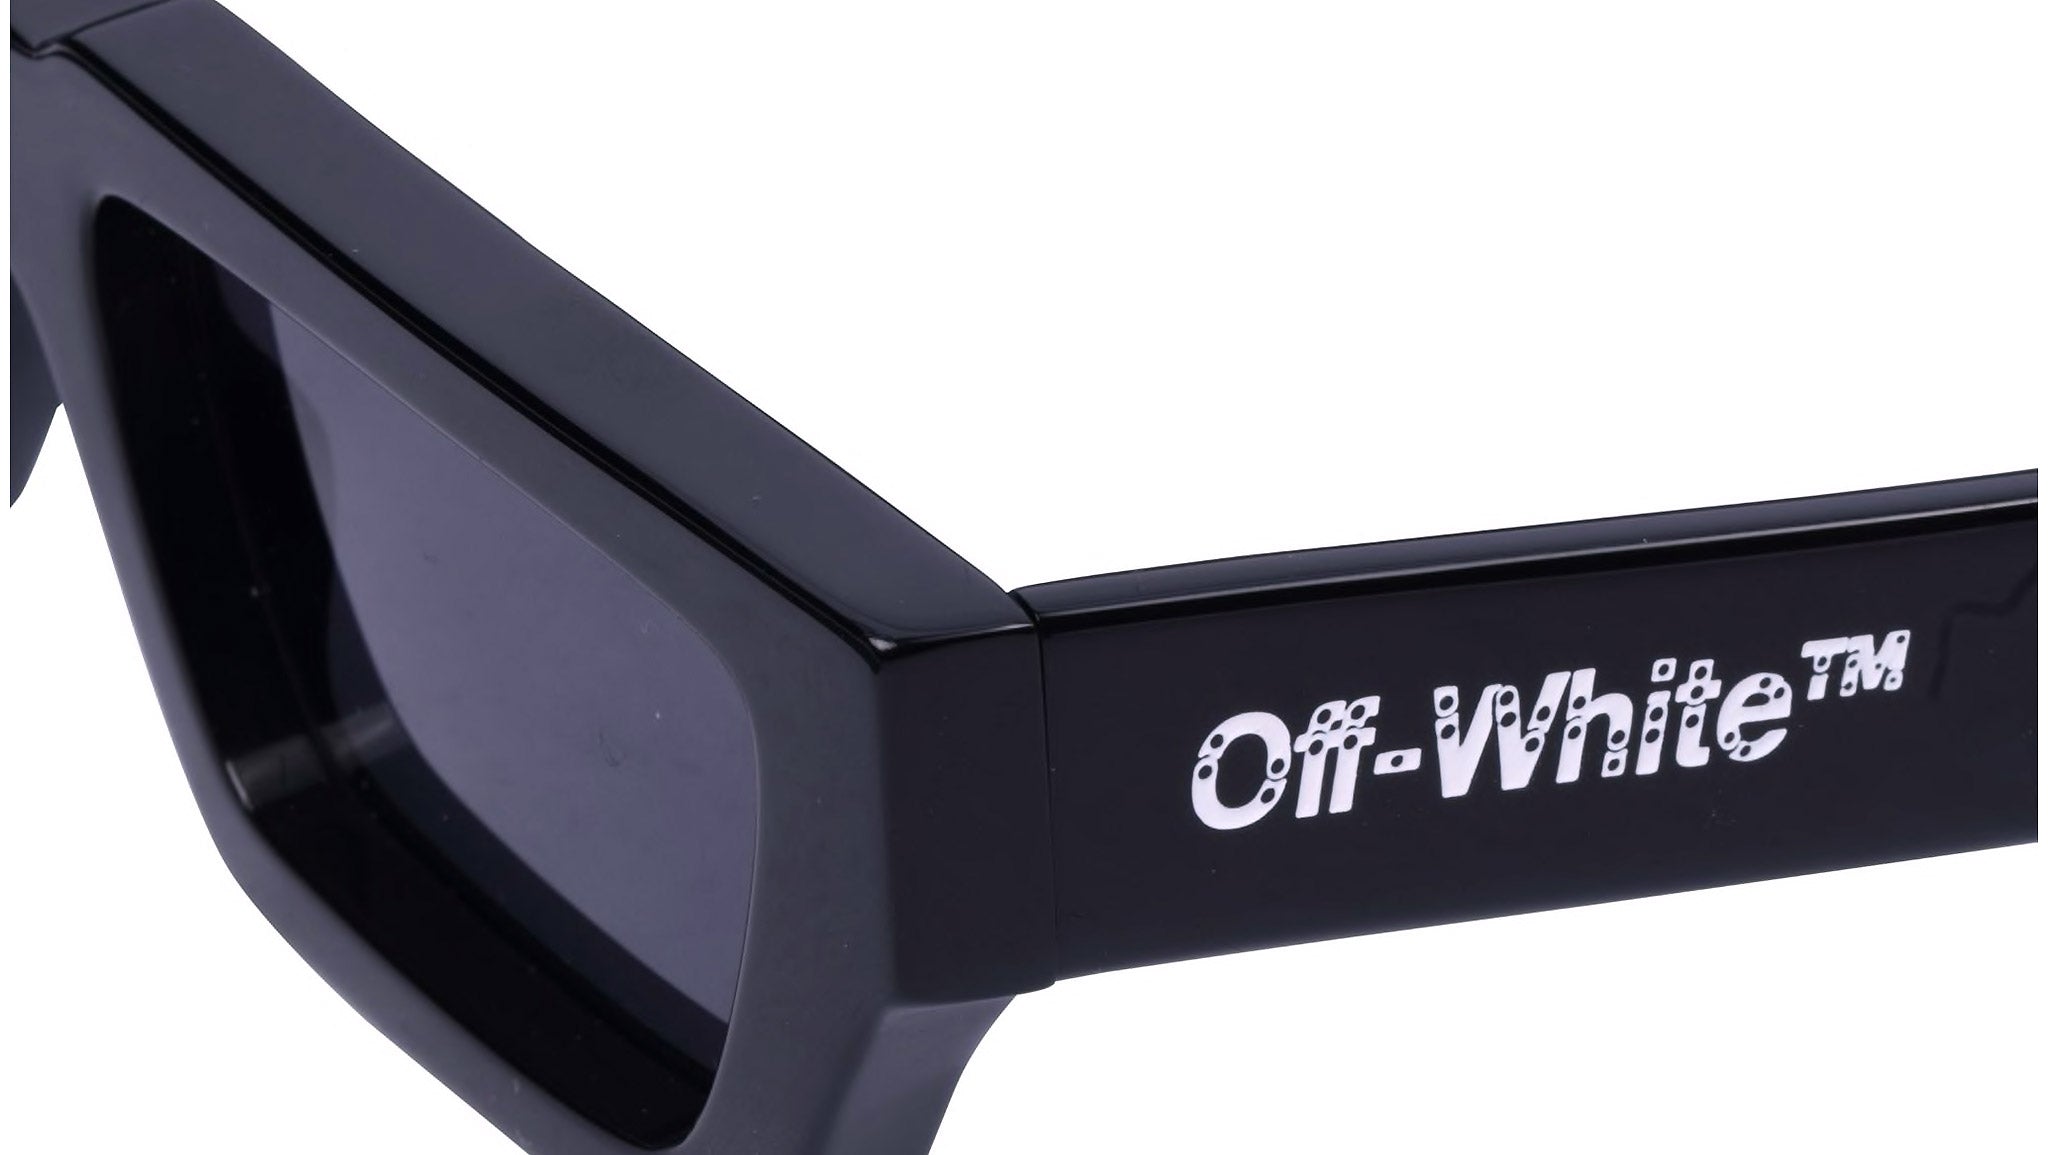 Off-White Manchester Sunglasses Black